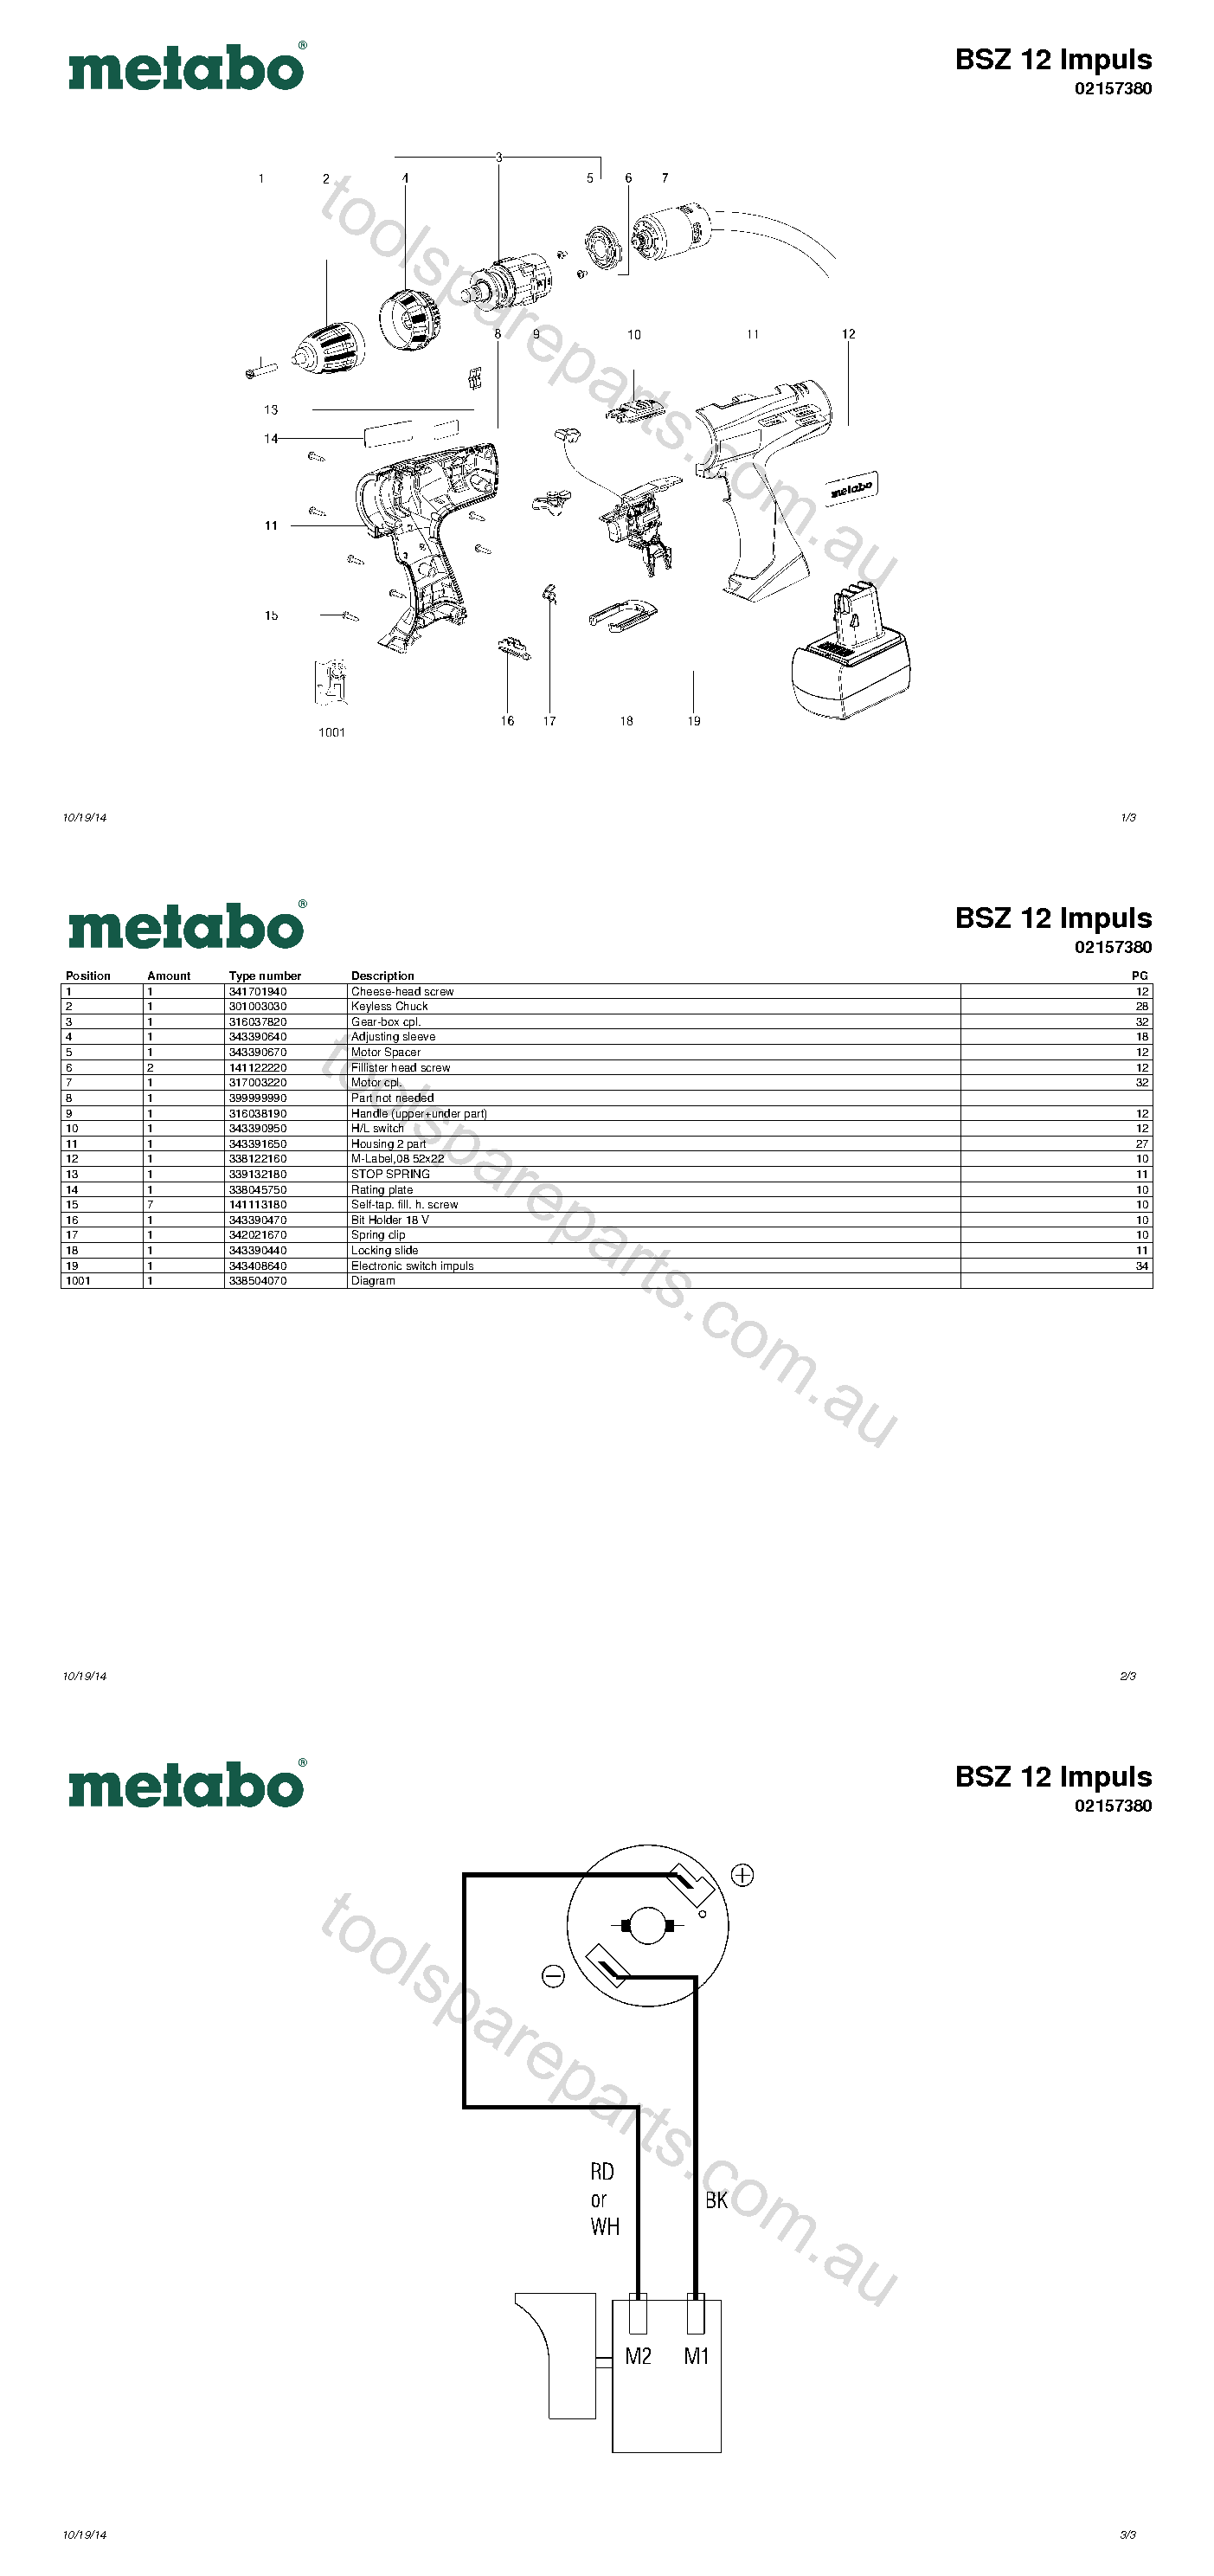 Metabo BSZ 12 Impuls 02157380  Diagram 1